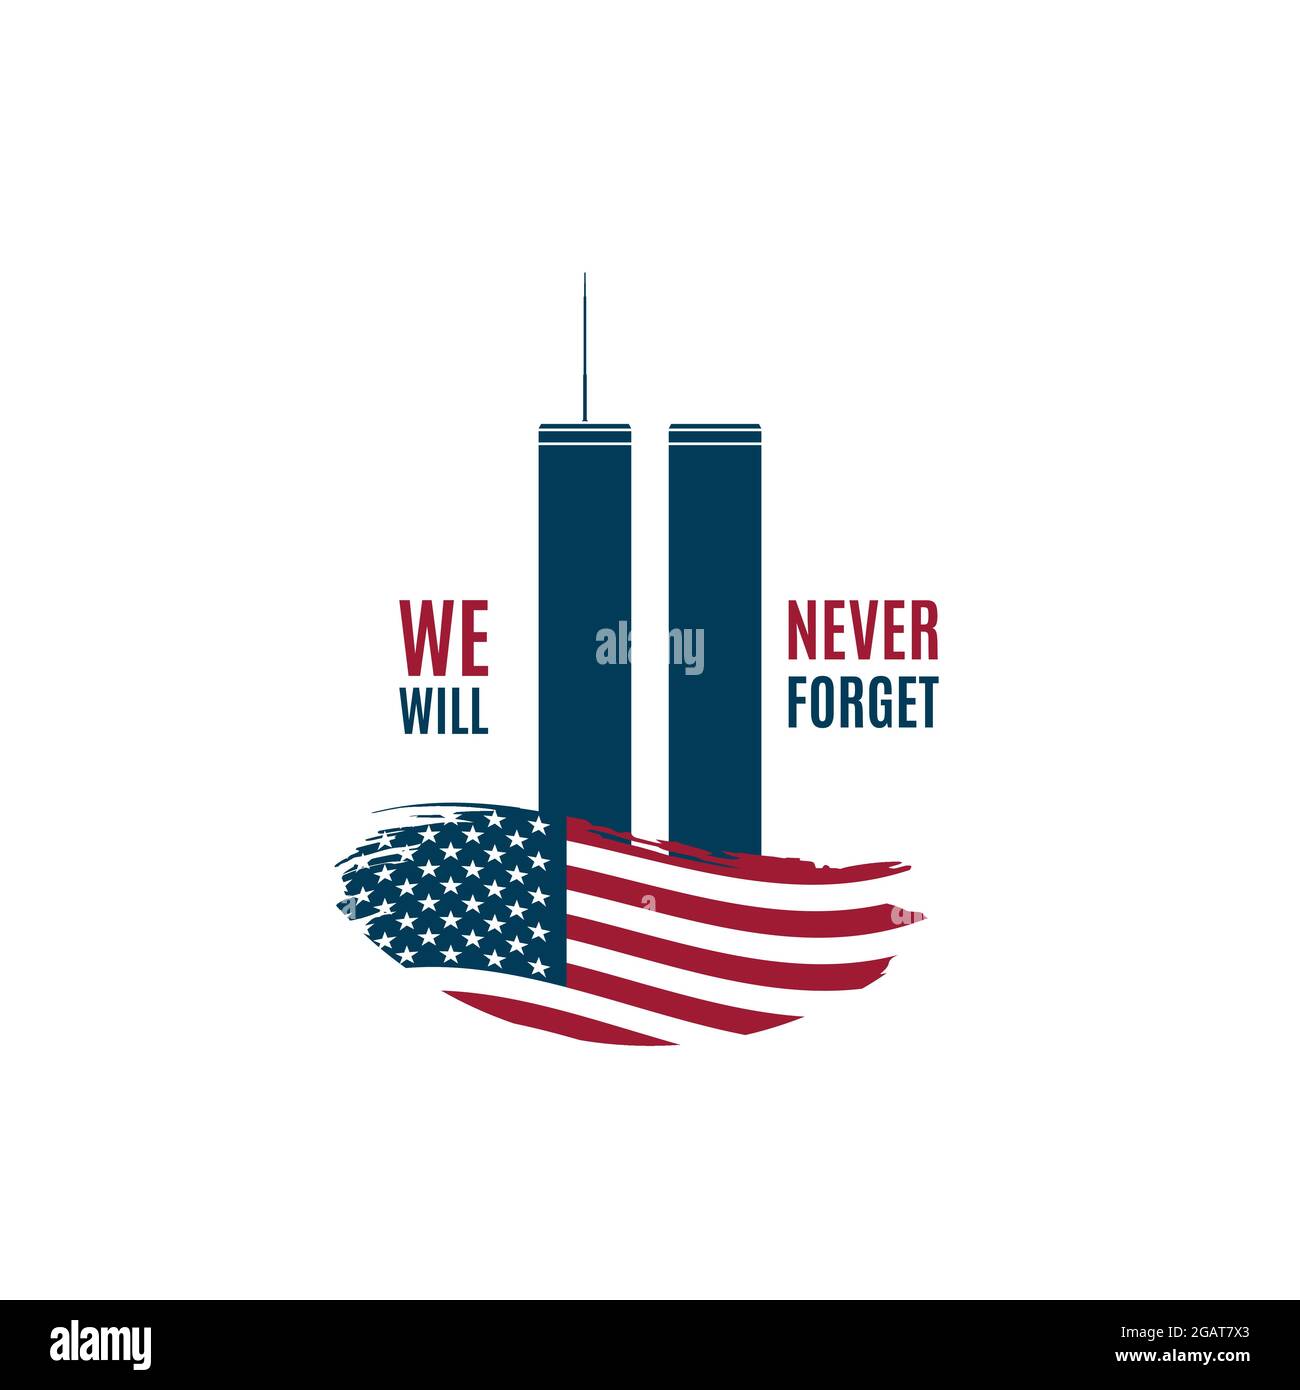 9/11 Patriot Day Karte mit Twin Towers auf amerikanischer Flagge und Phrase We will Never Forget. USA Patriot Day Banner. 11. September 2001. World Trade Center Stock Vektor